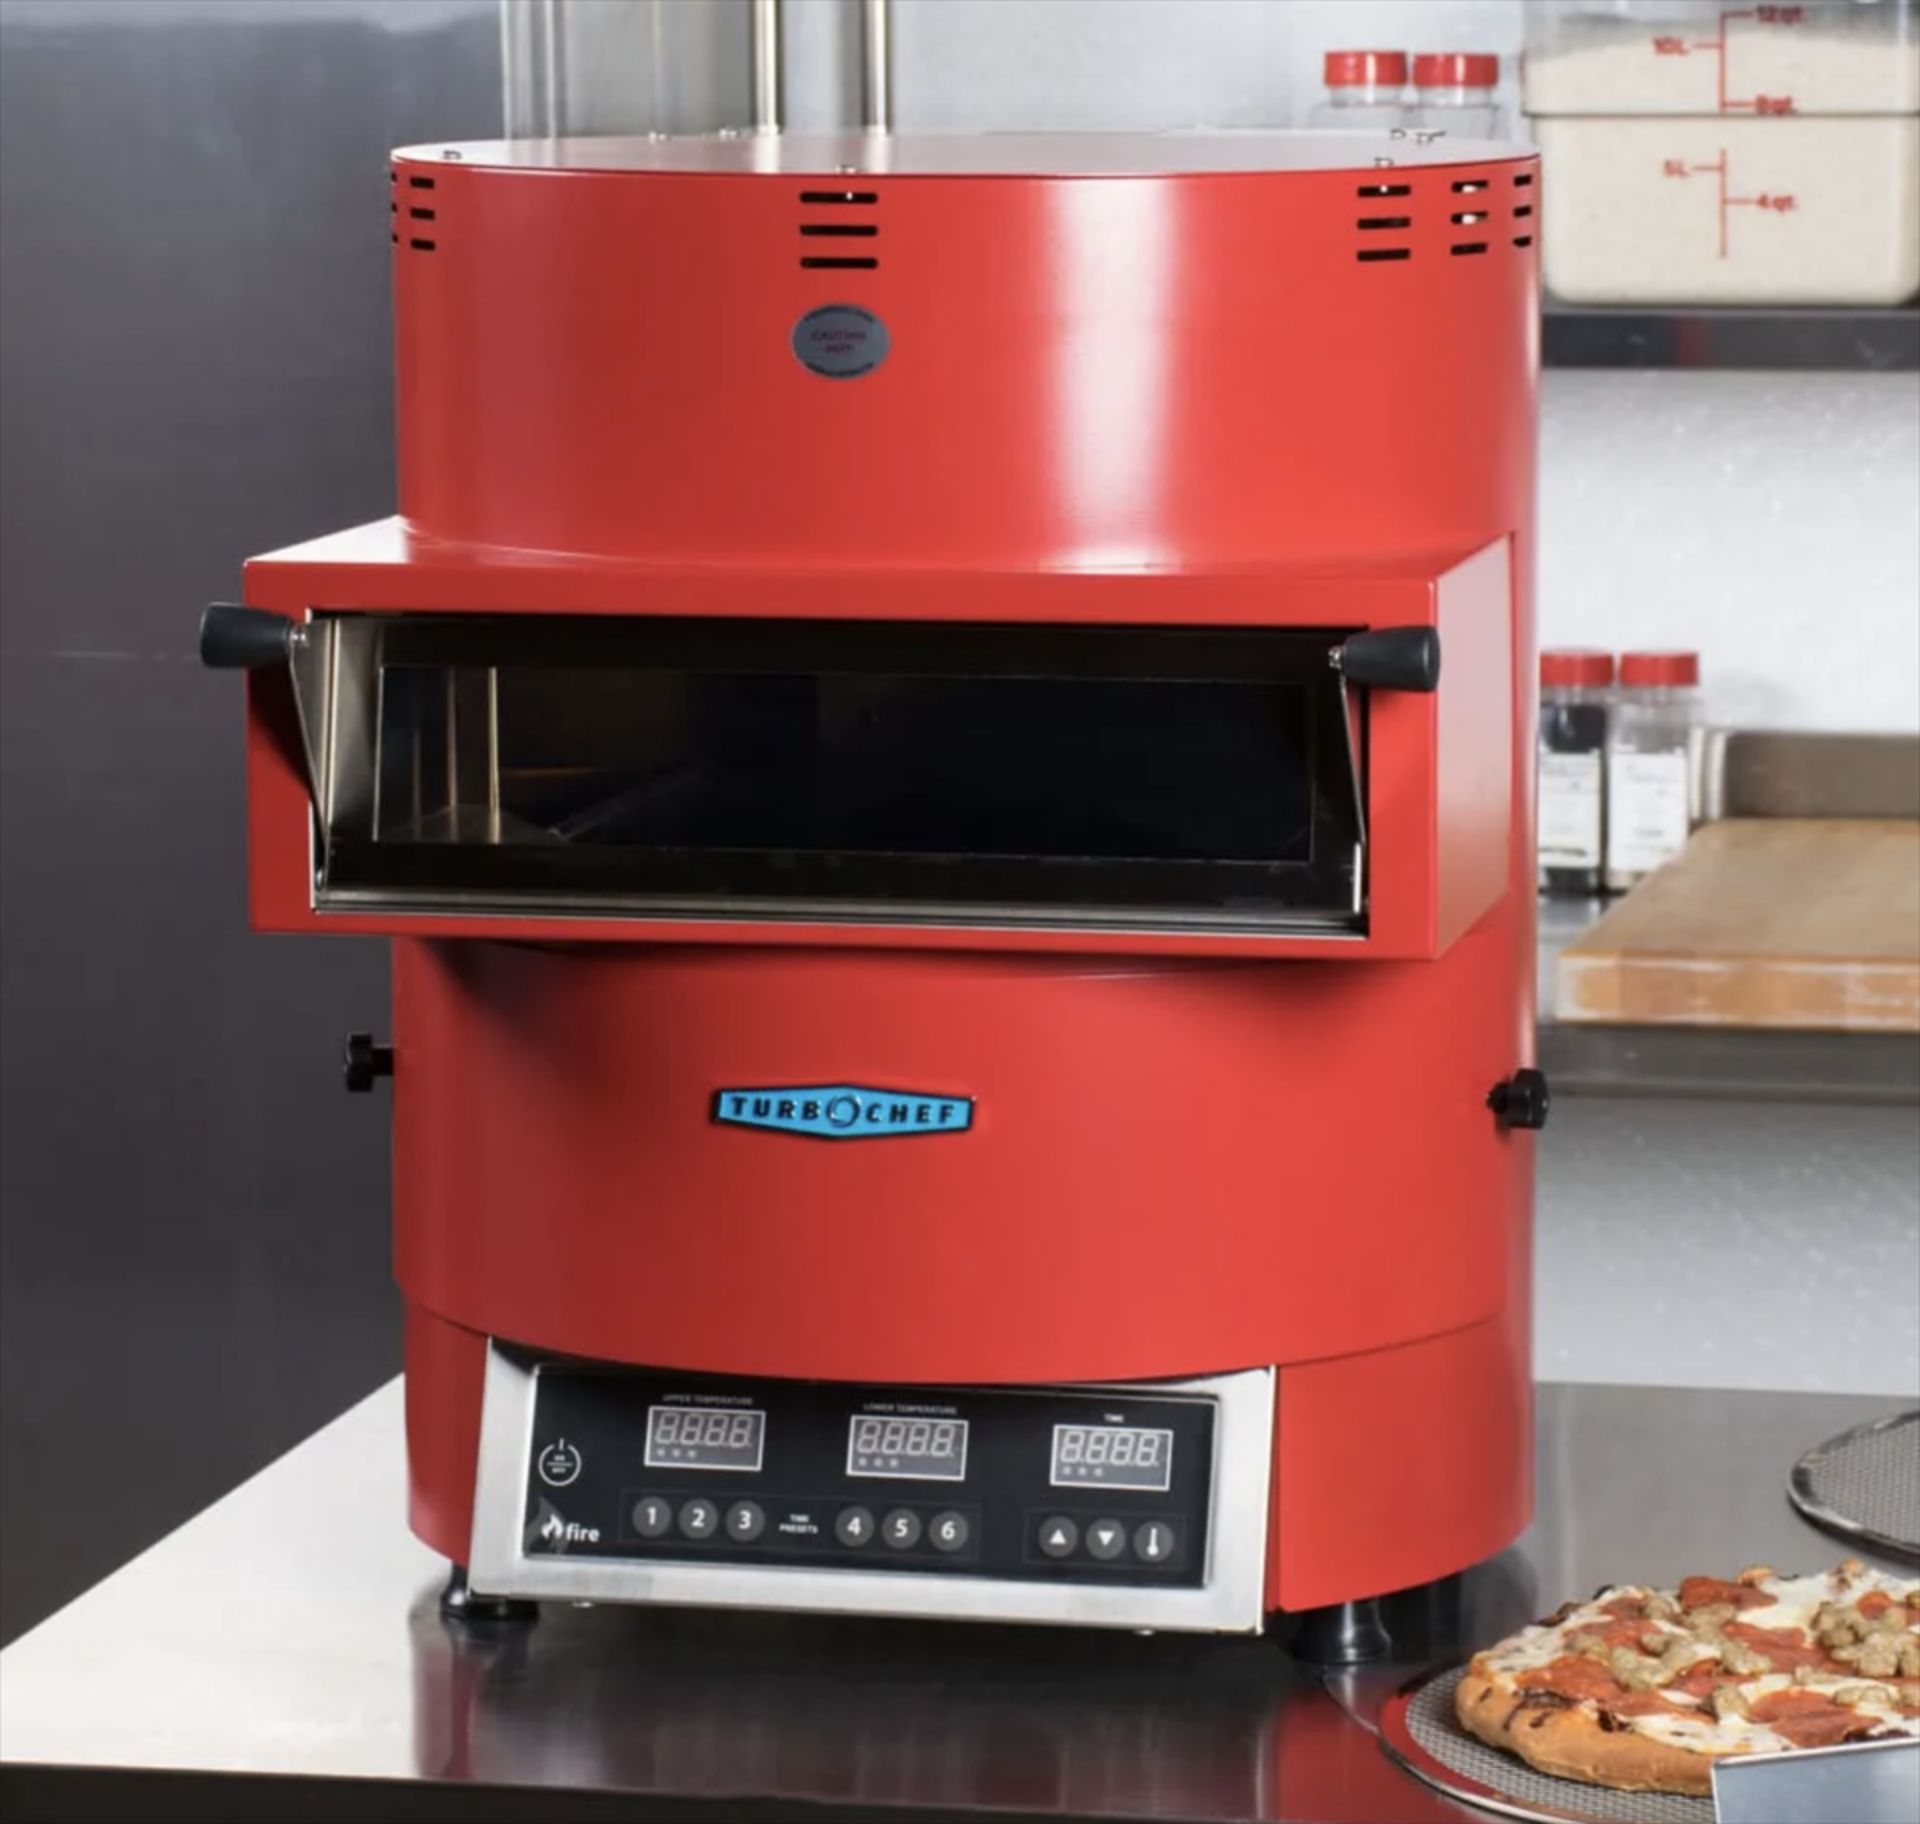 Turbochef Fire Pizza Oven Single Phase